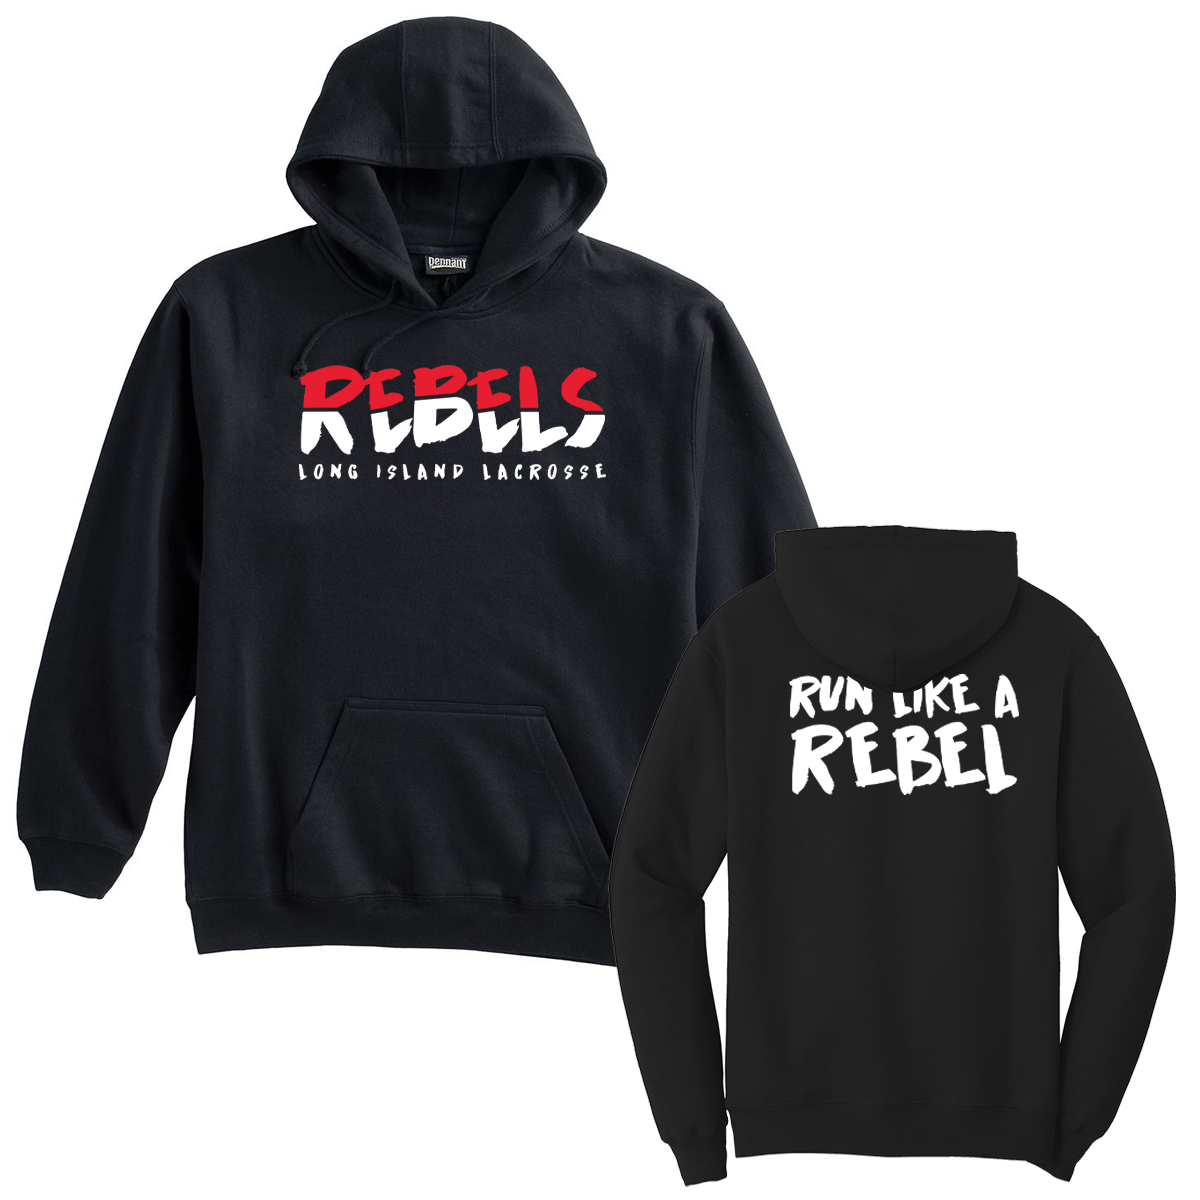 Rebels Lacrosse "Run like a Rebel"  Sweatshirt